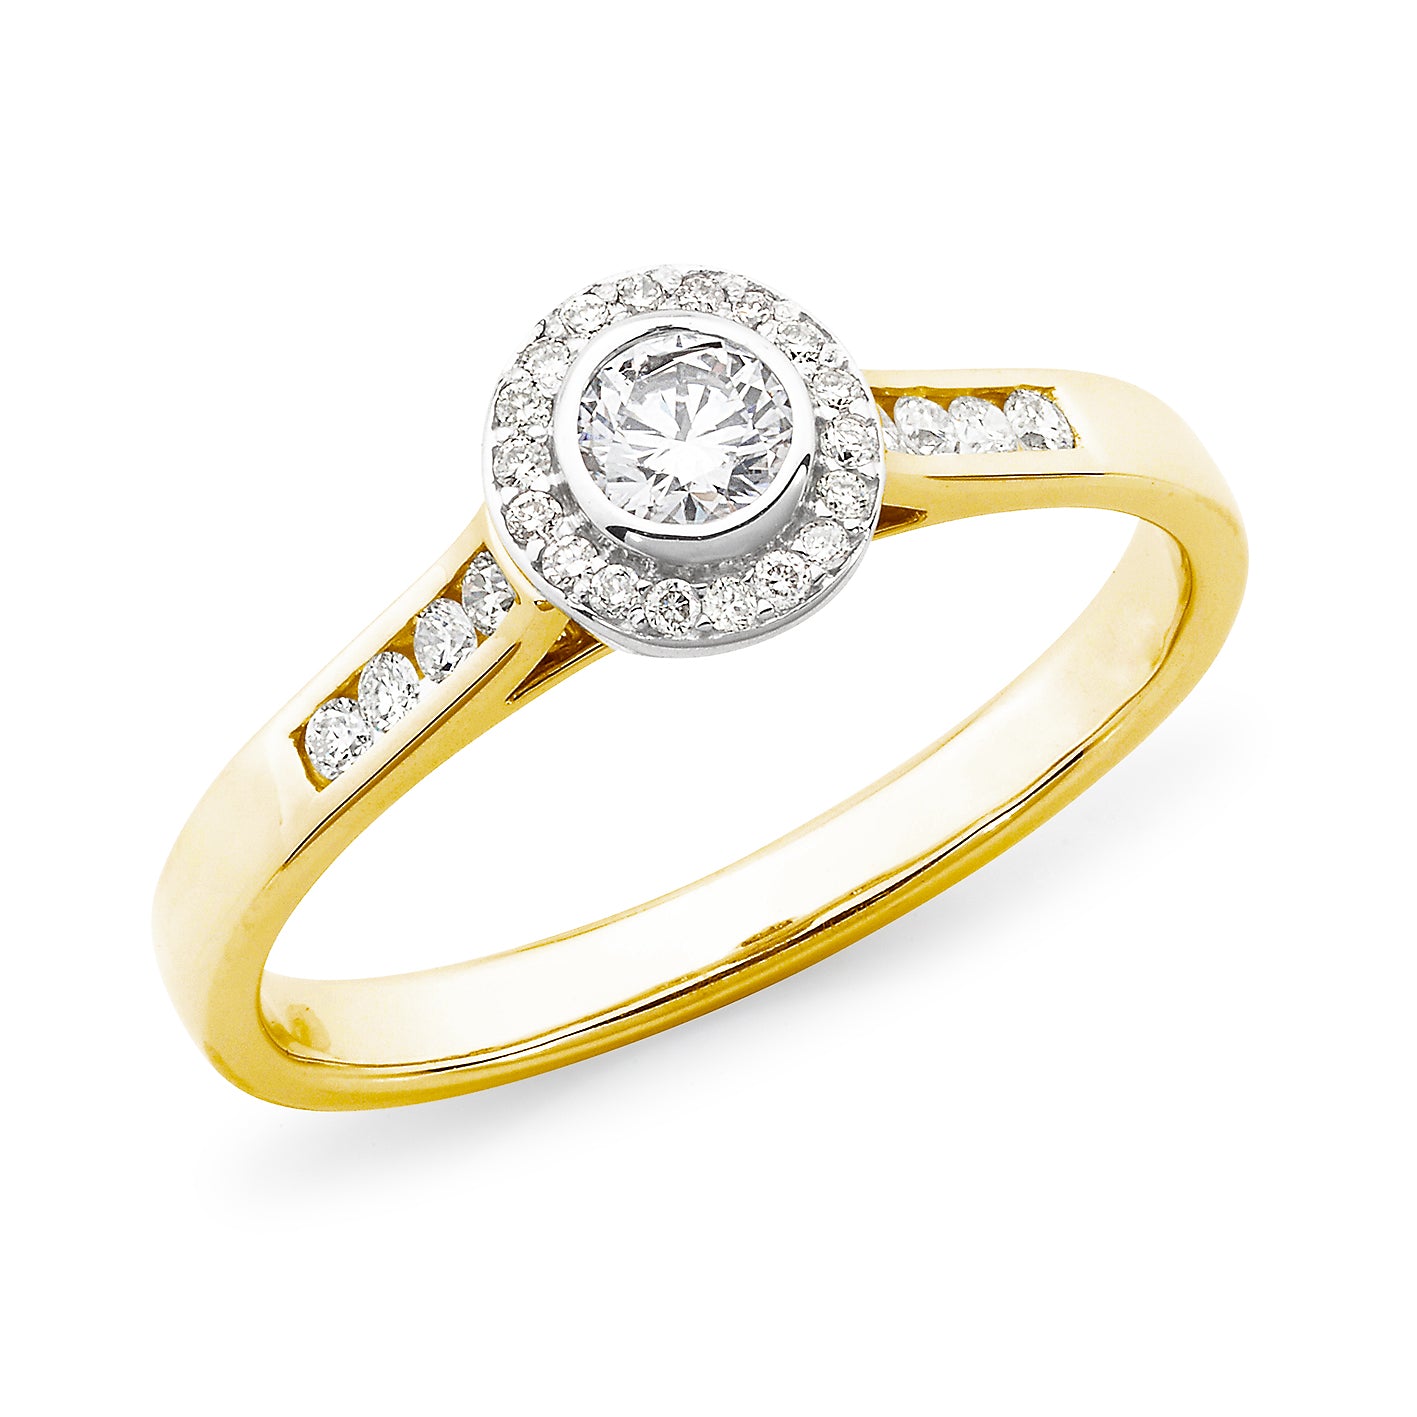 18ct White Gold Round Brilliant Cut White & Pink Diamond Halo Engagement Ring